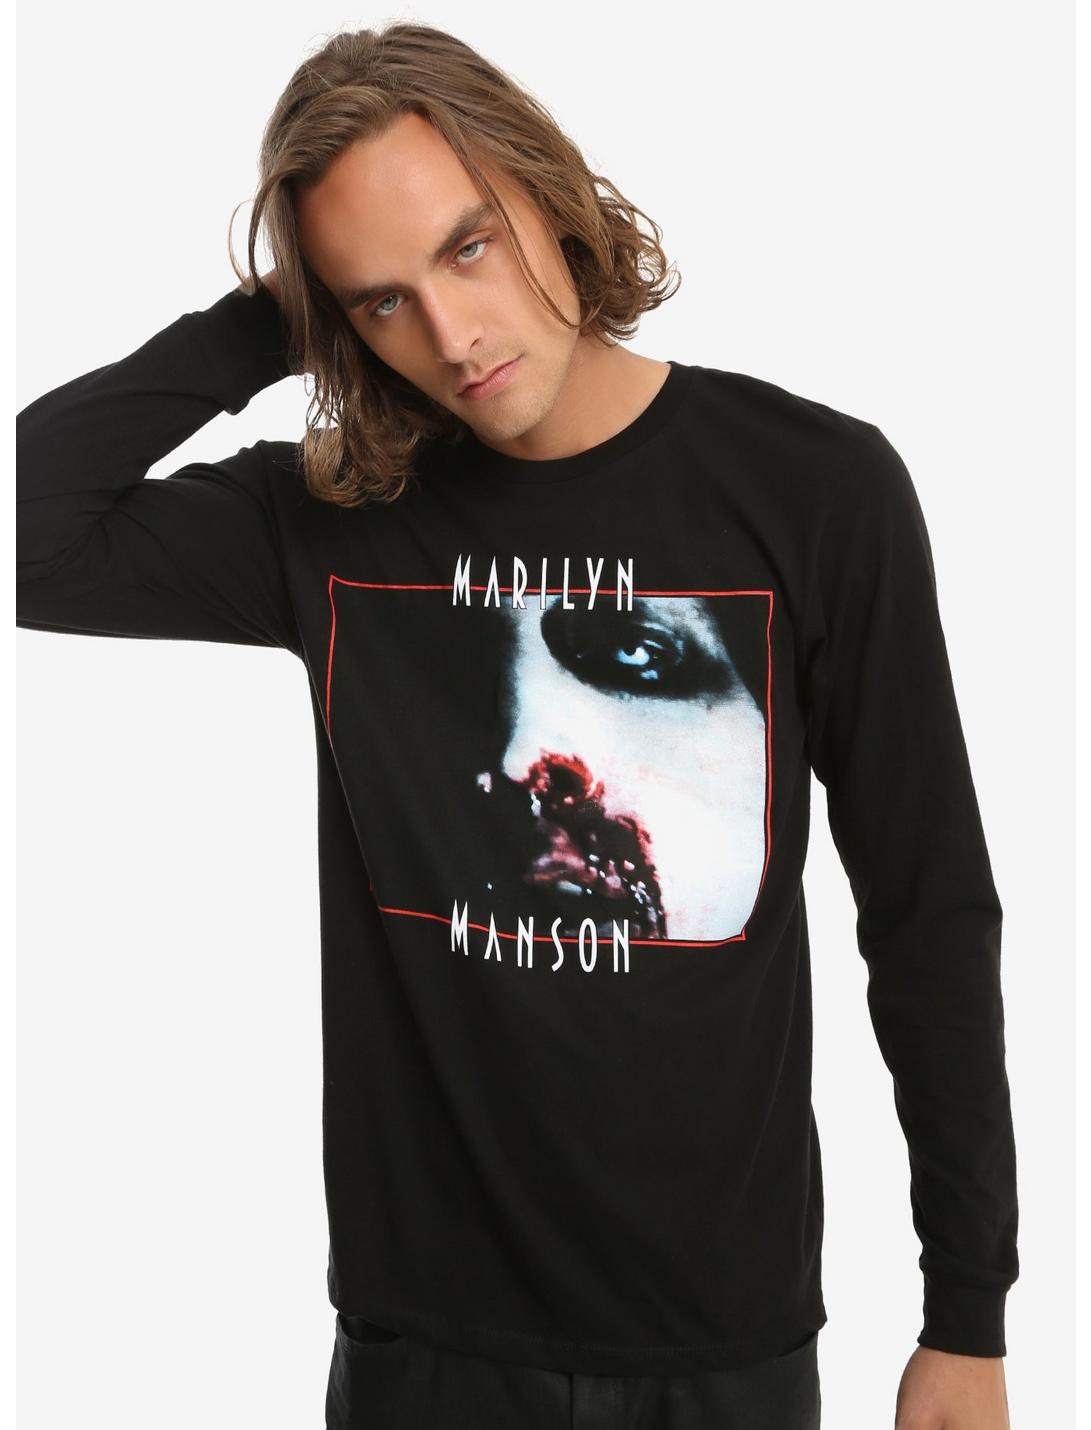 Marilyn Manson (s)AINT Long-Sleeve T-Shirt, BLACK, hi-res